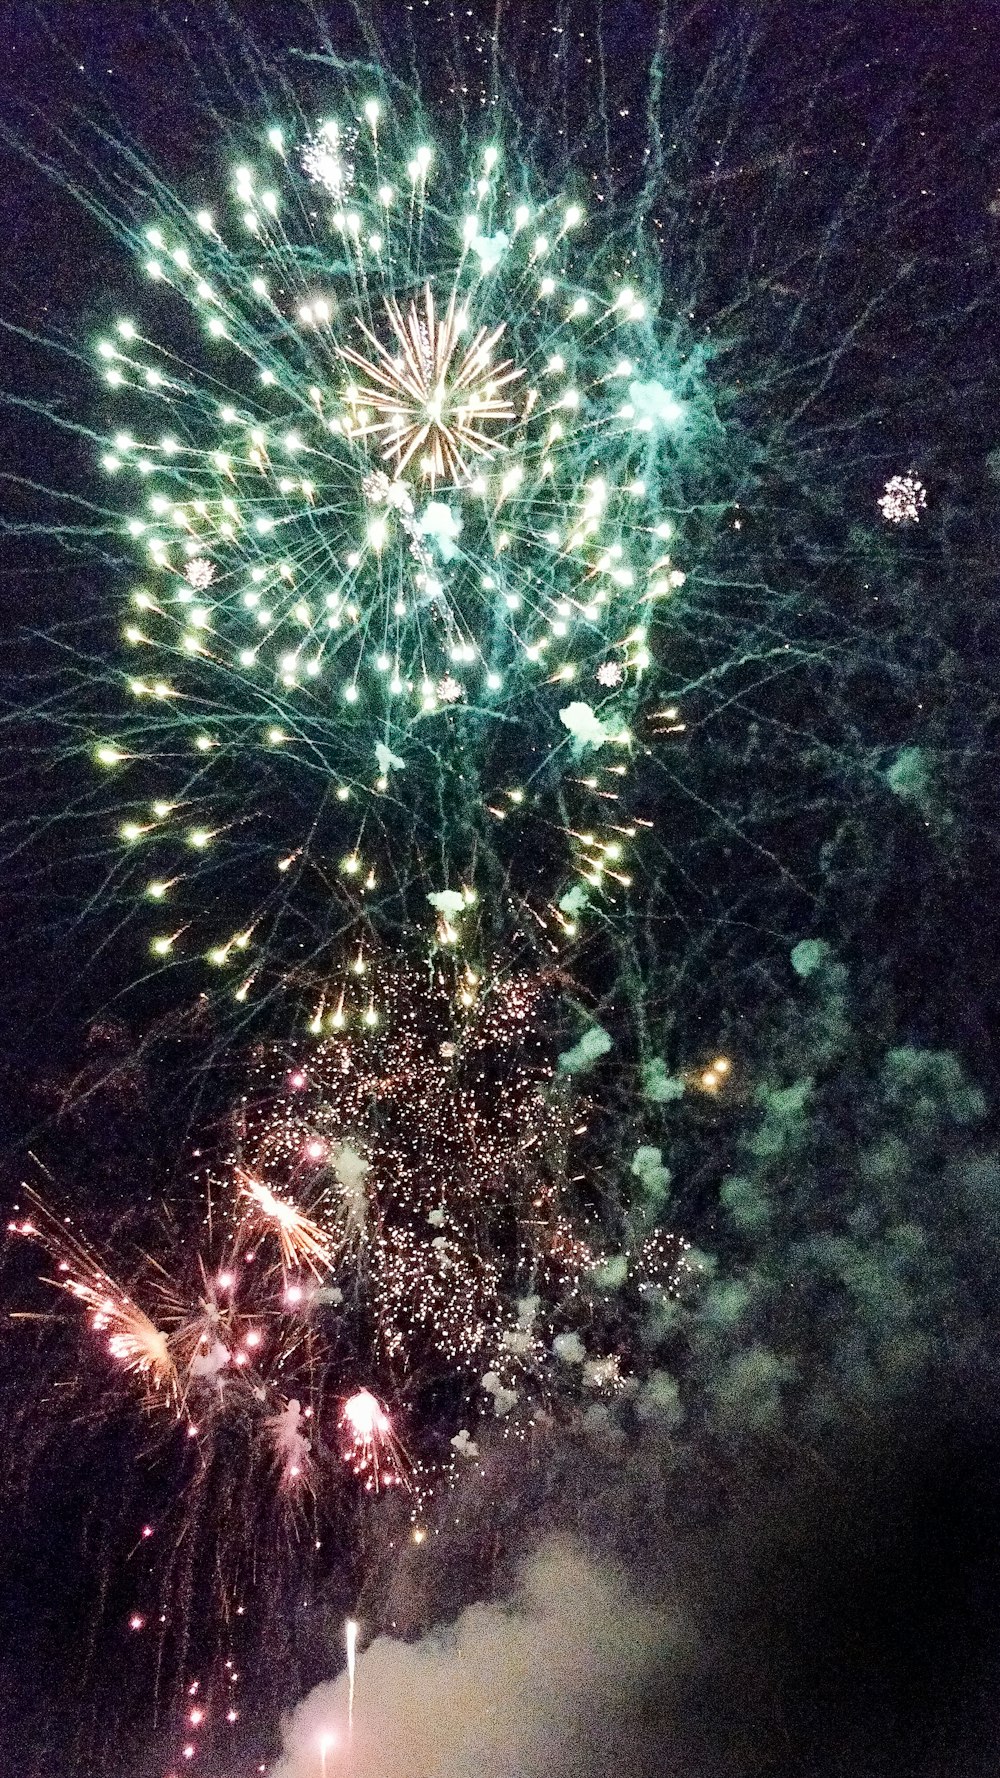 fireworks display during nighttime